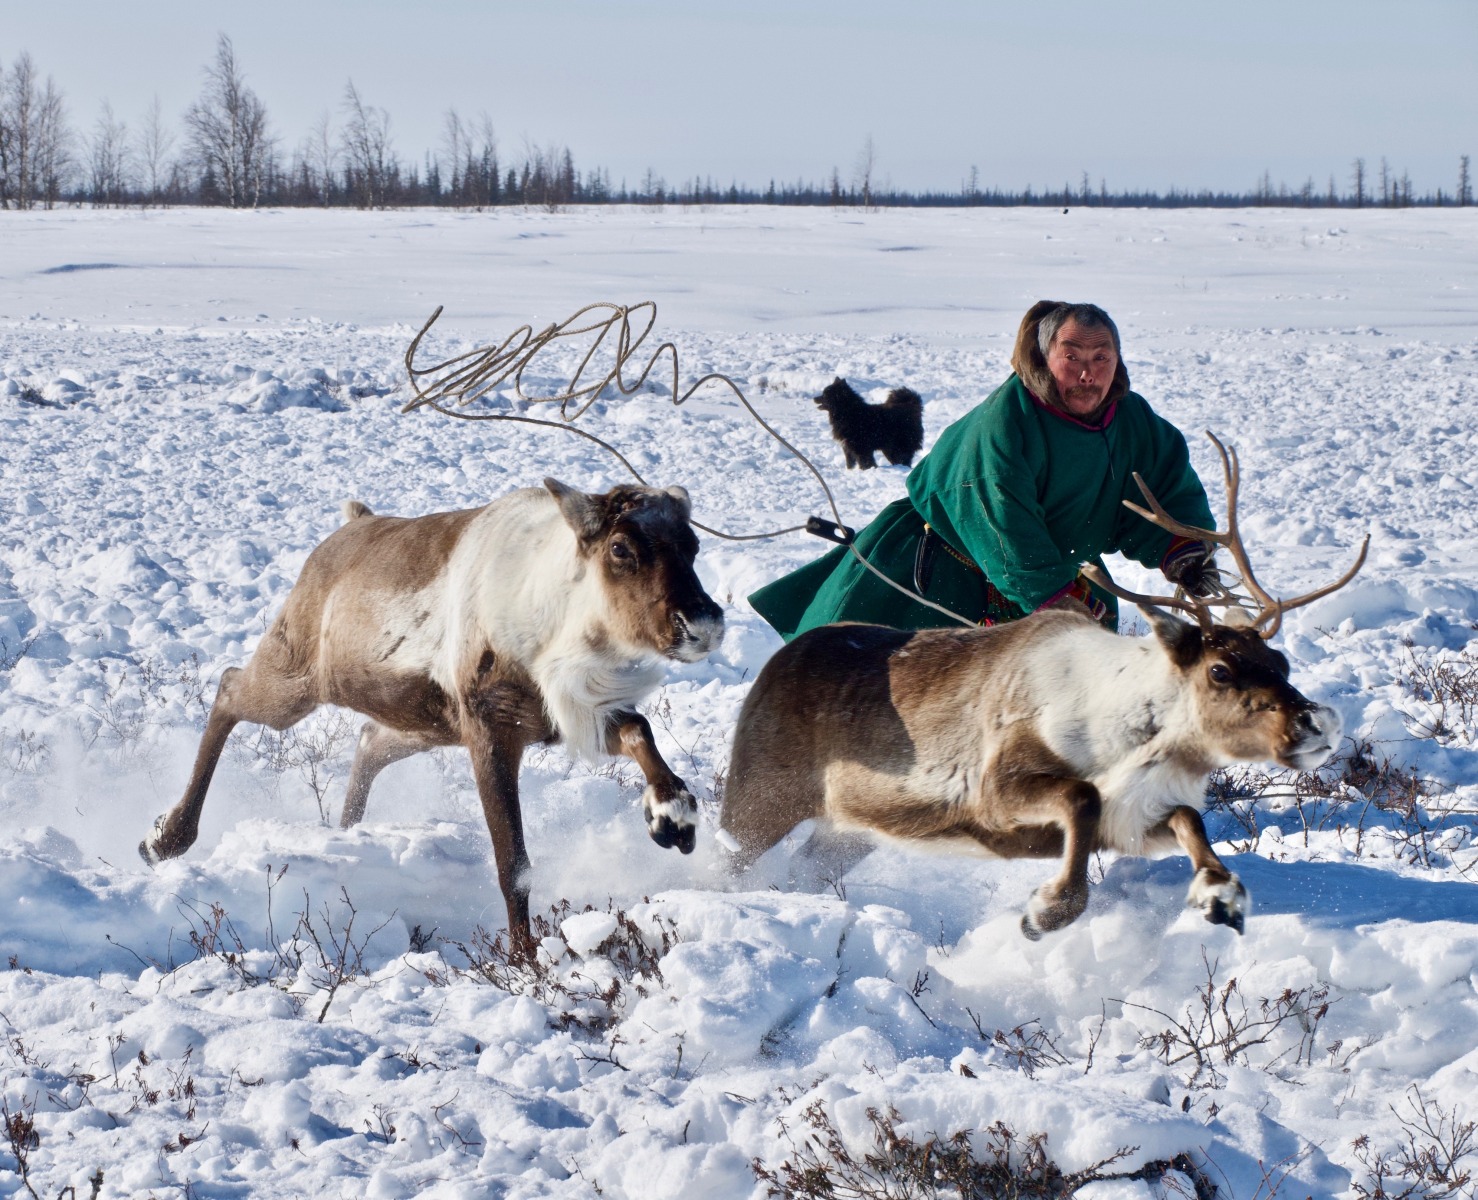 Nenets nomad lassoing reindeer on the Yamal Peninsula